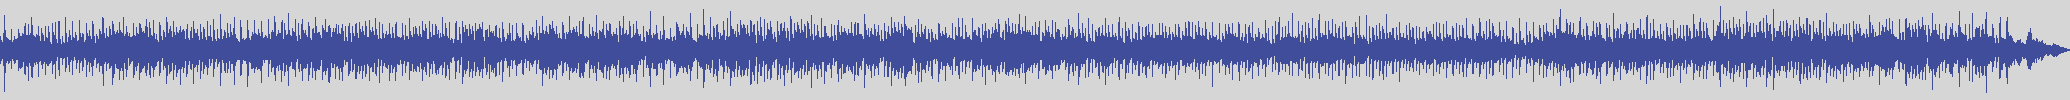 digiphonic_records [DPR013] Little Tony - Penso a Lei e Sto Con Te [Original Mix] audio wave form